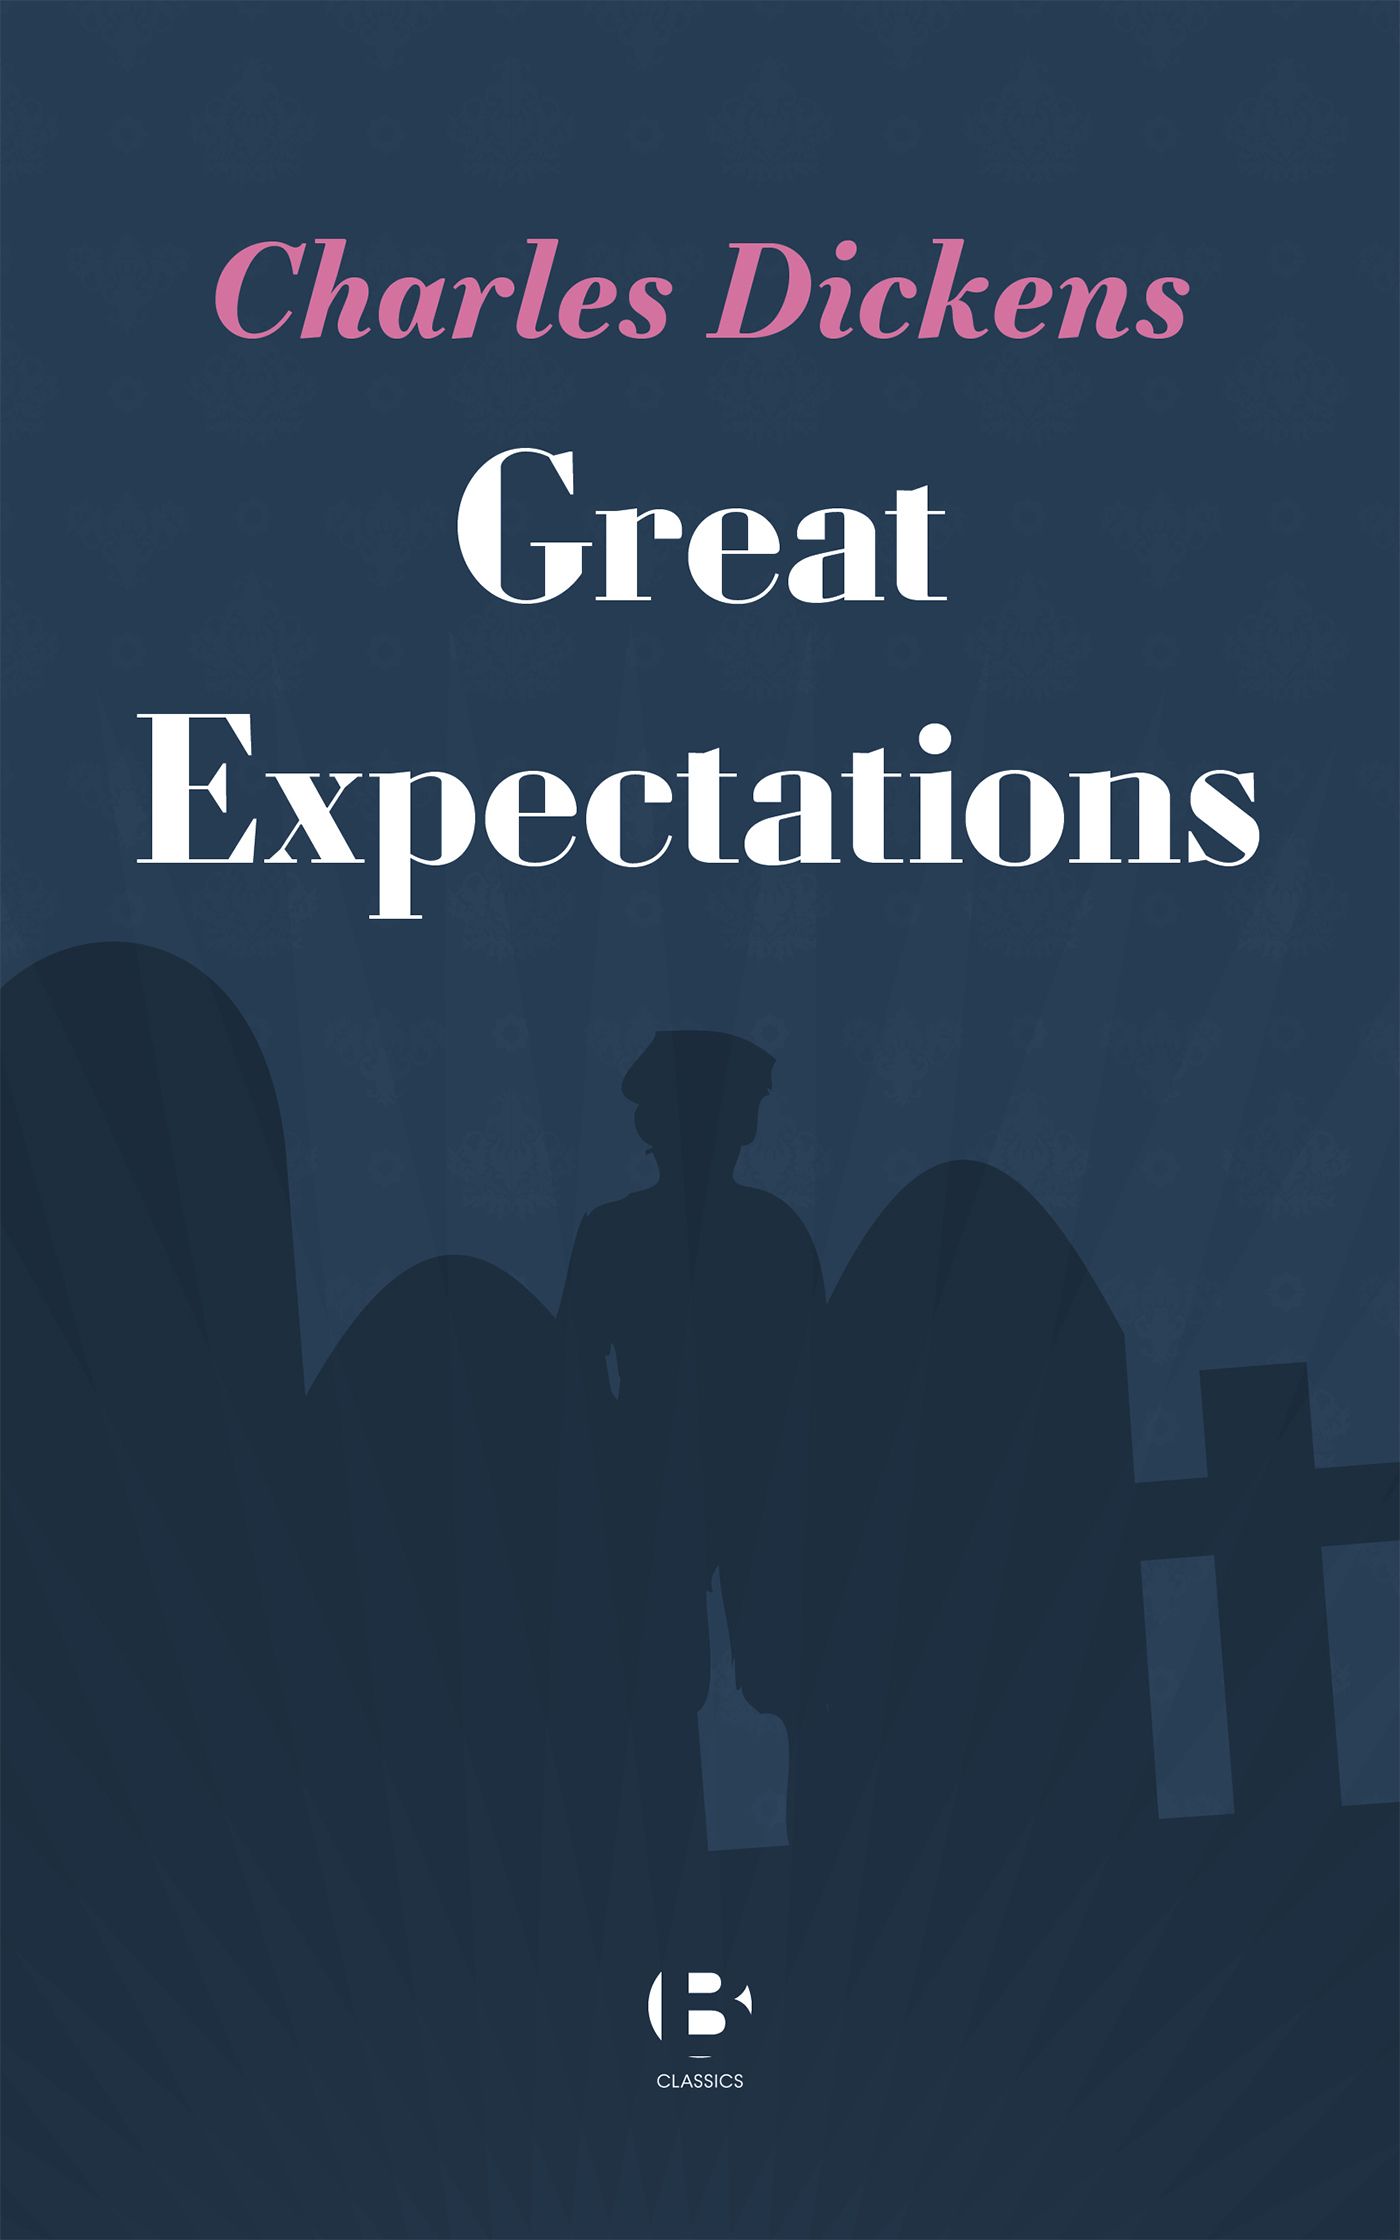 Great Expectations, e-bog af Charles Dickens